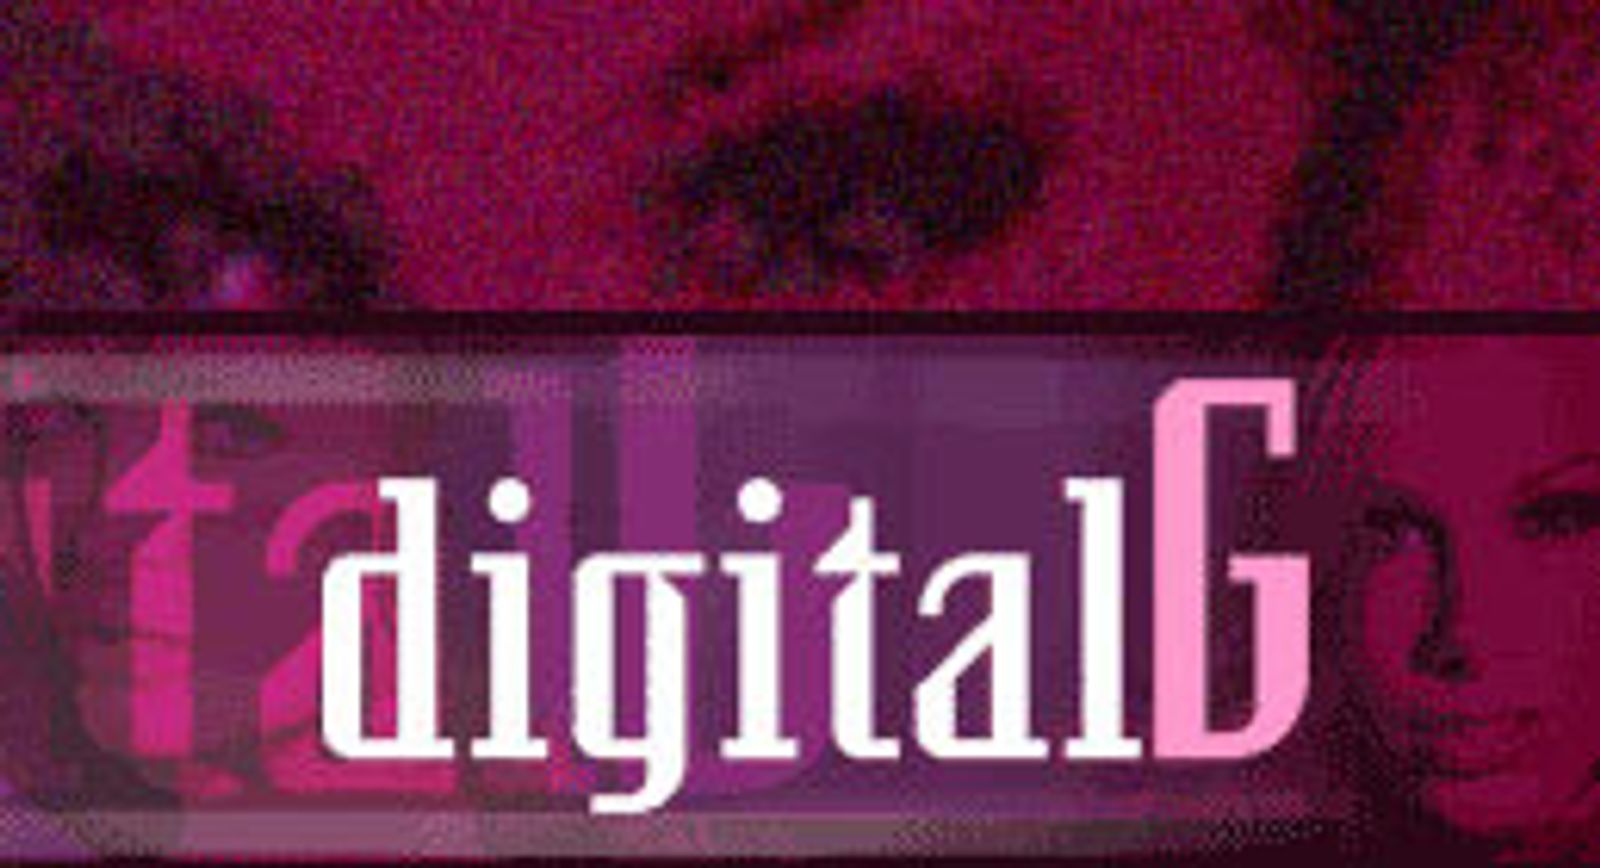 Digital G Girls Land Mainstream Series Leads